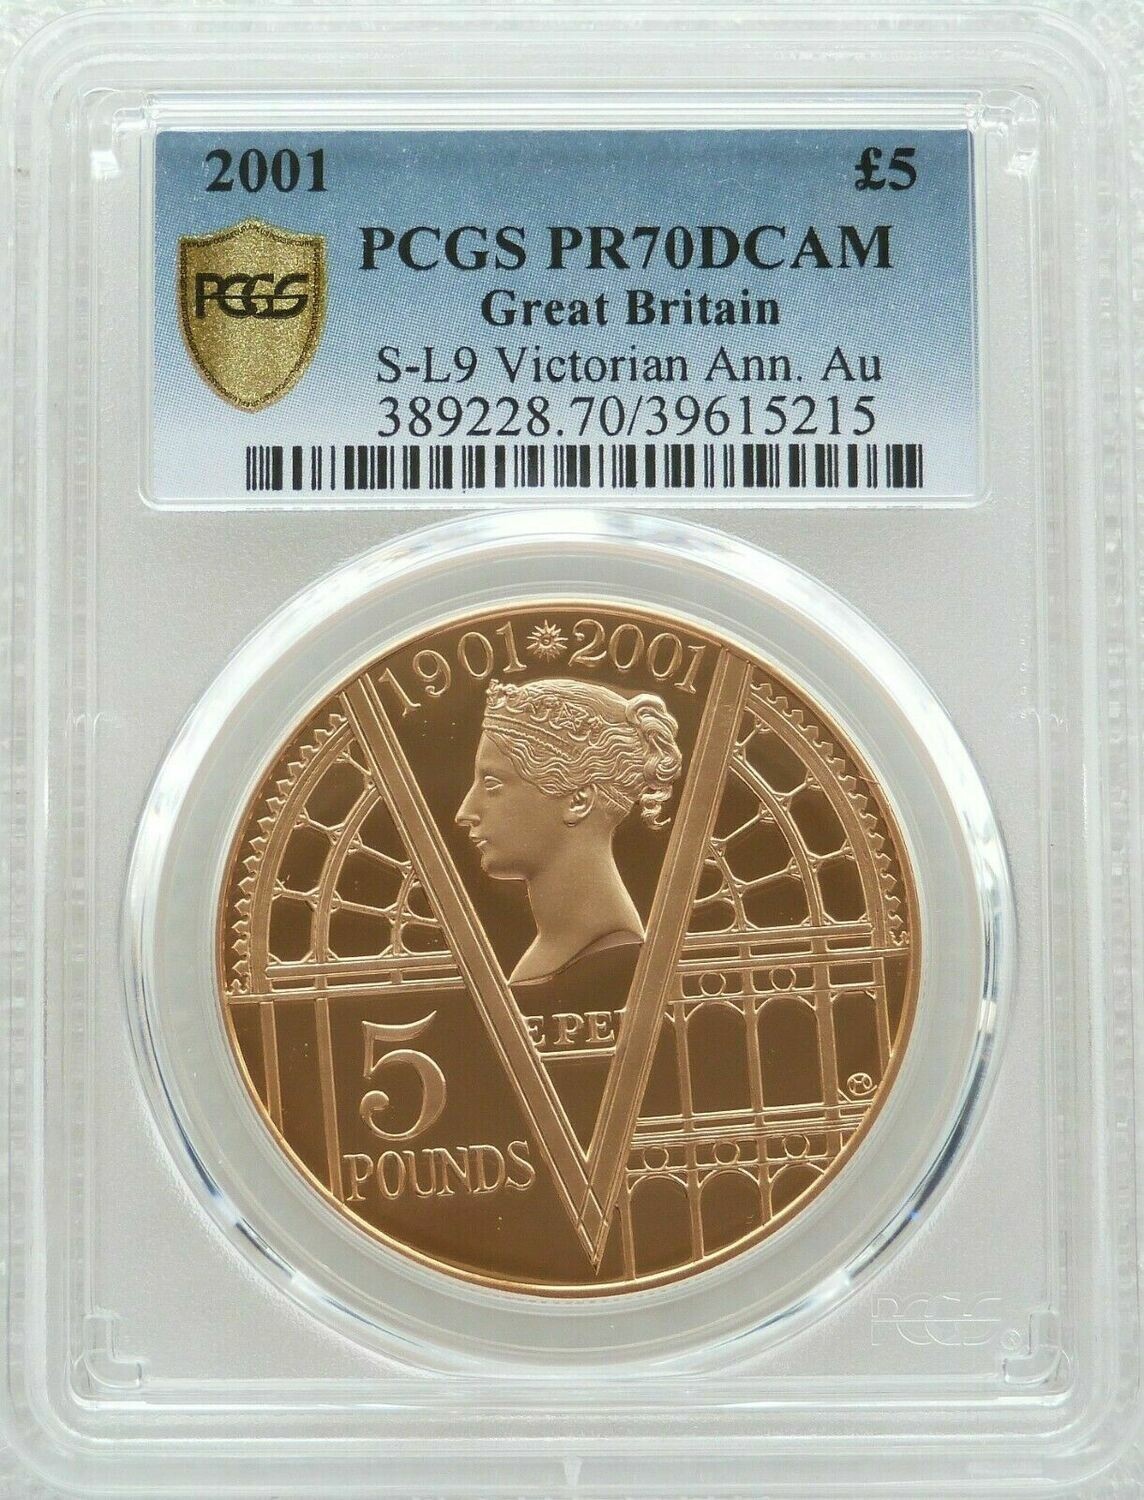 2001 Queen Victoria £5 Gold Proof Coin PCGS PR70 DCAM